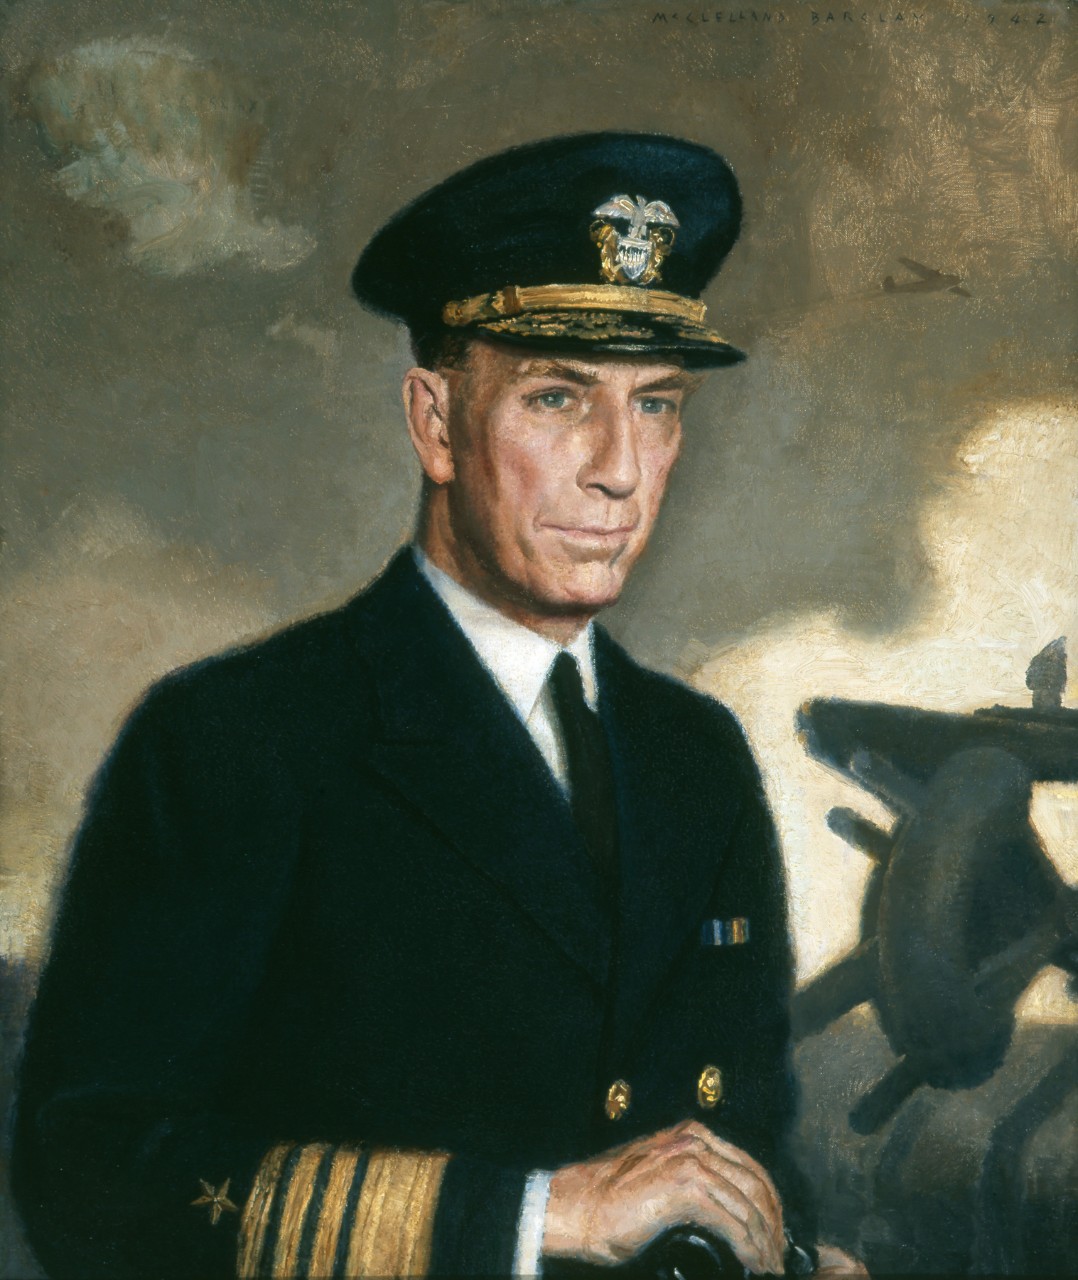 Portrait of Admiral Ingersoll in dress blue uniform